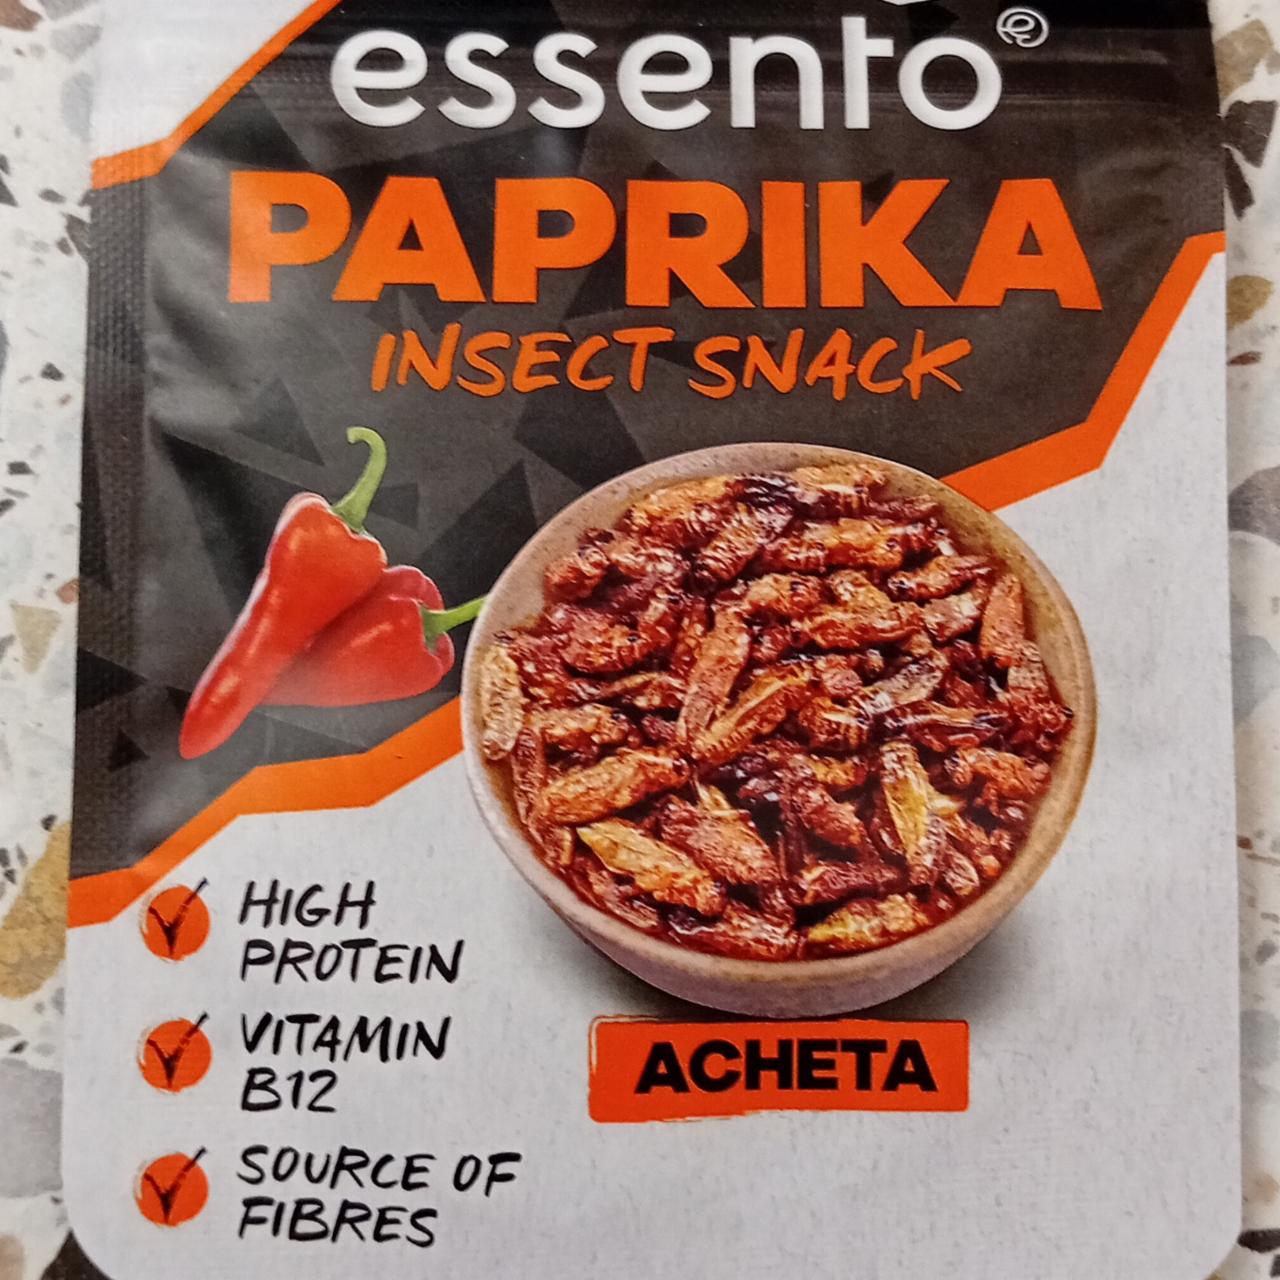 Fotografie - Paprika insect snack Acheta essento